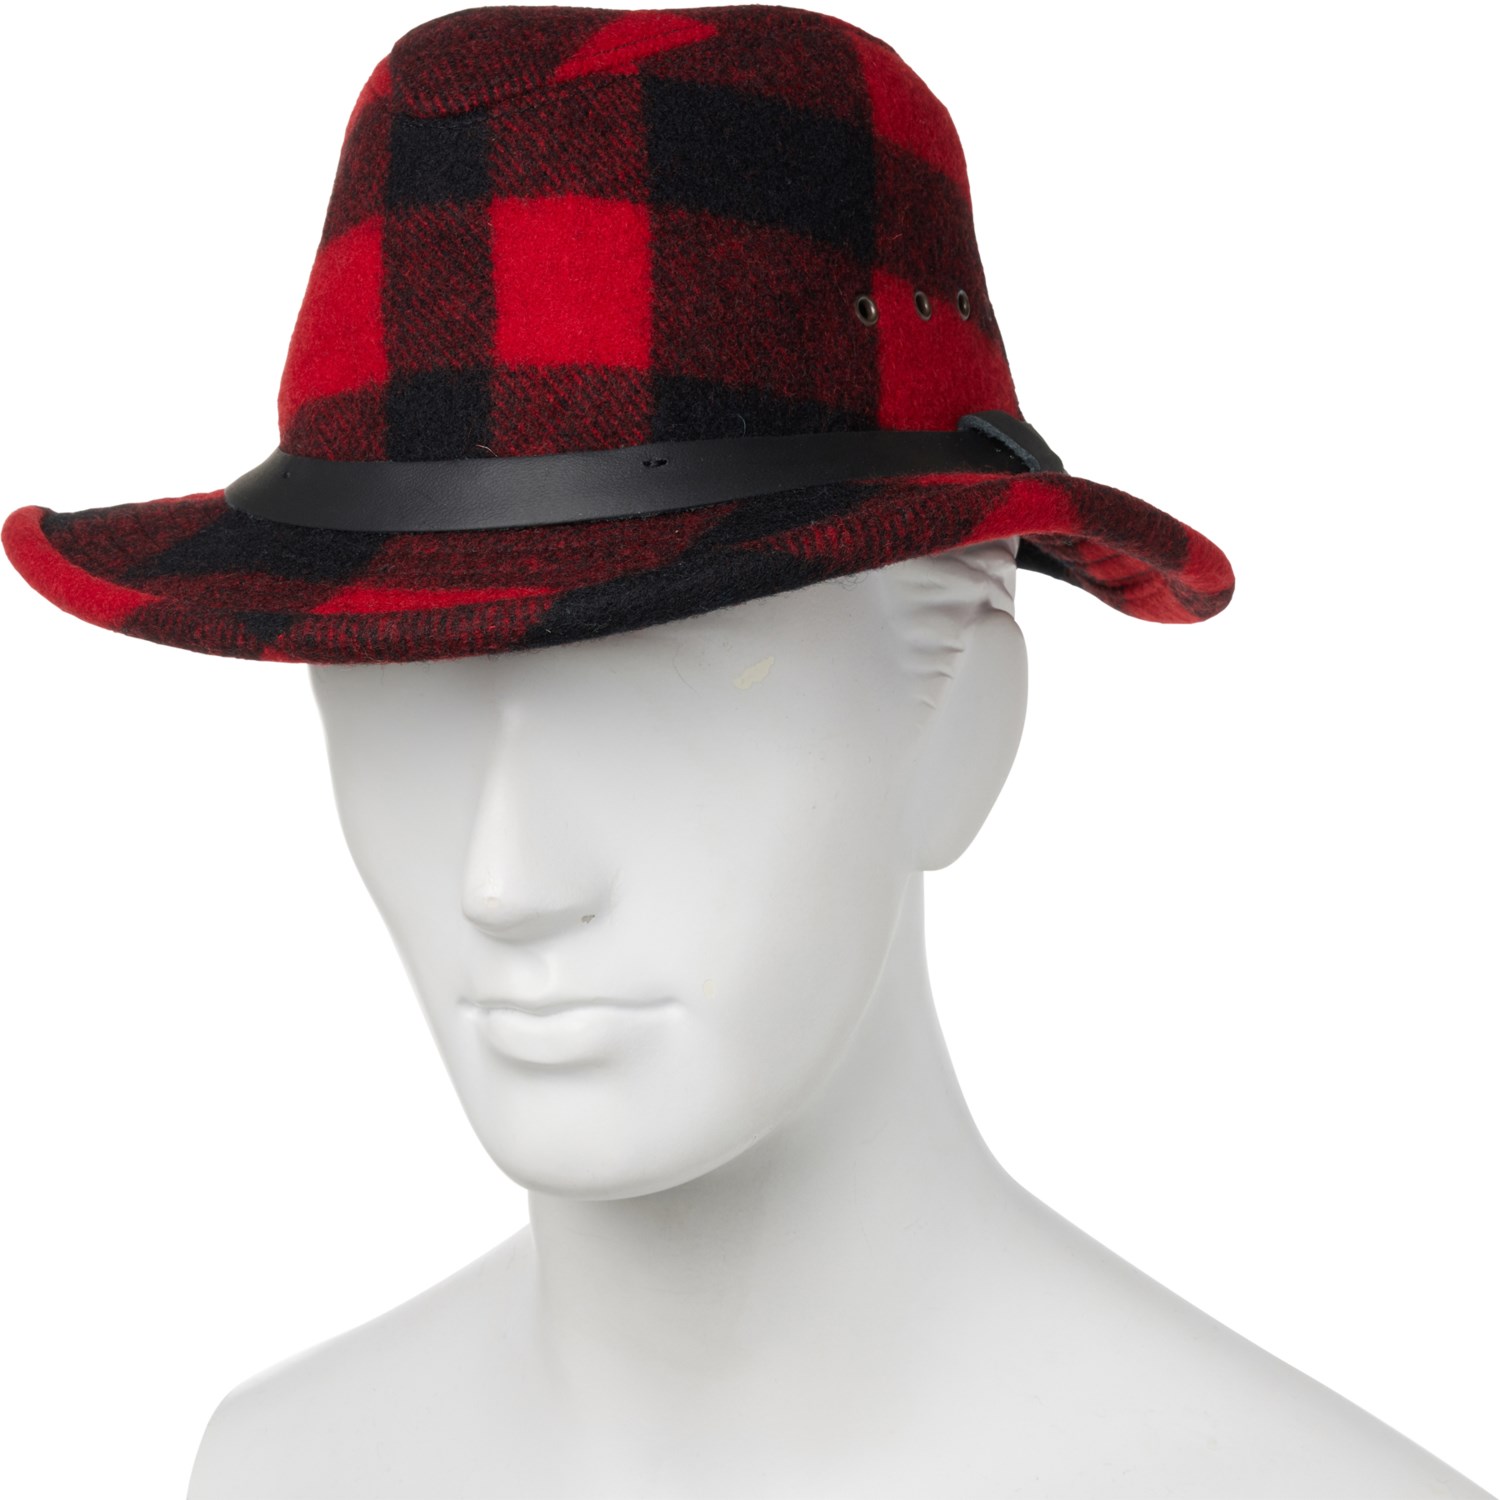 Filson Wool Packer Hat (For Men) - Save 56%